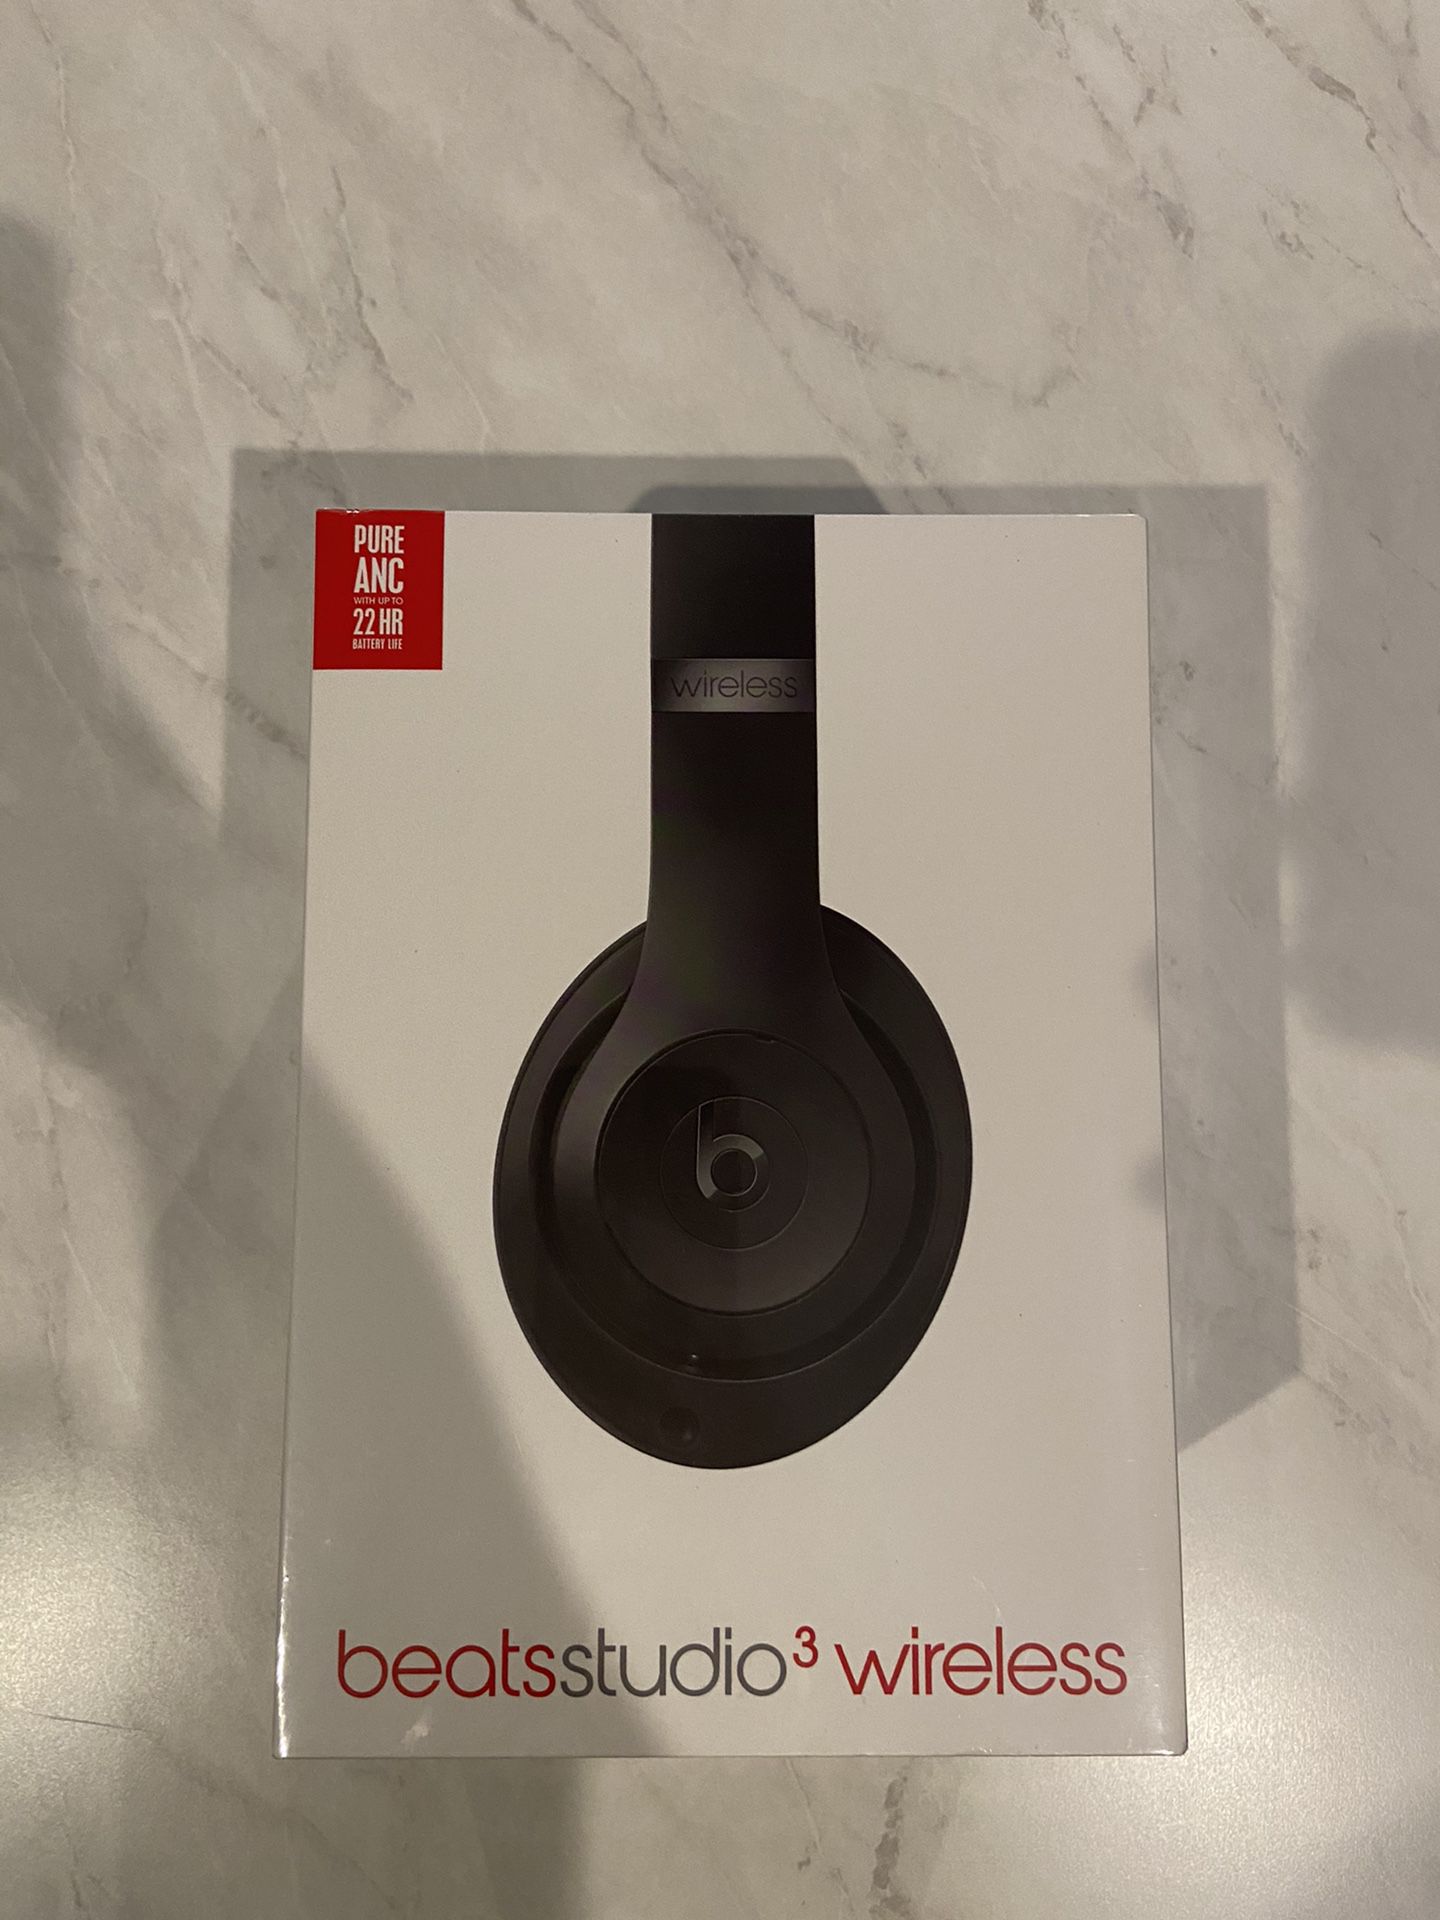 Beats studio 3 wireless-brand new